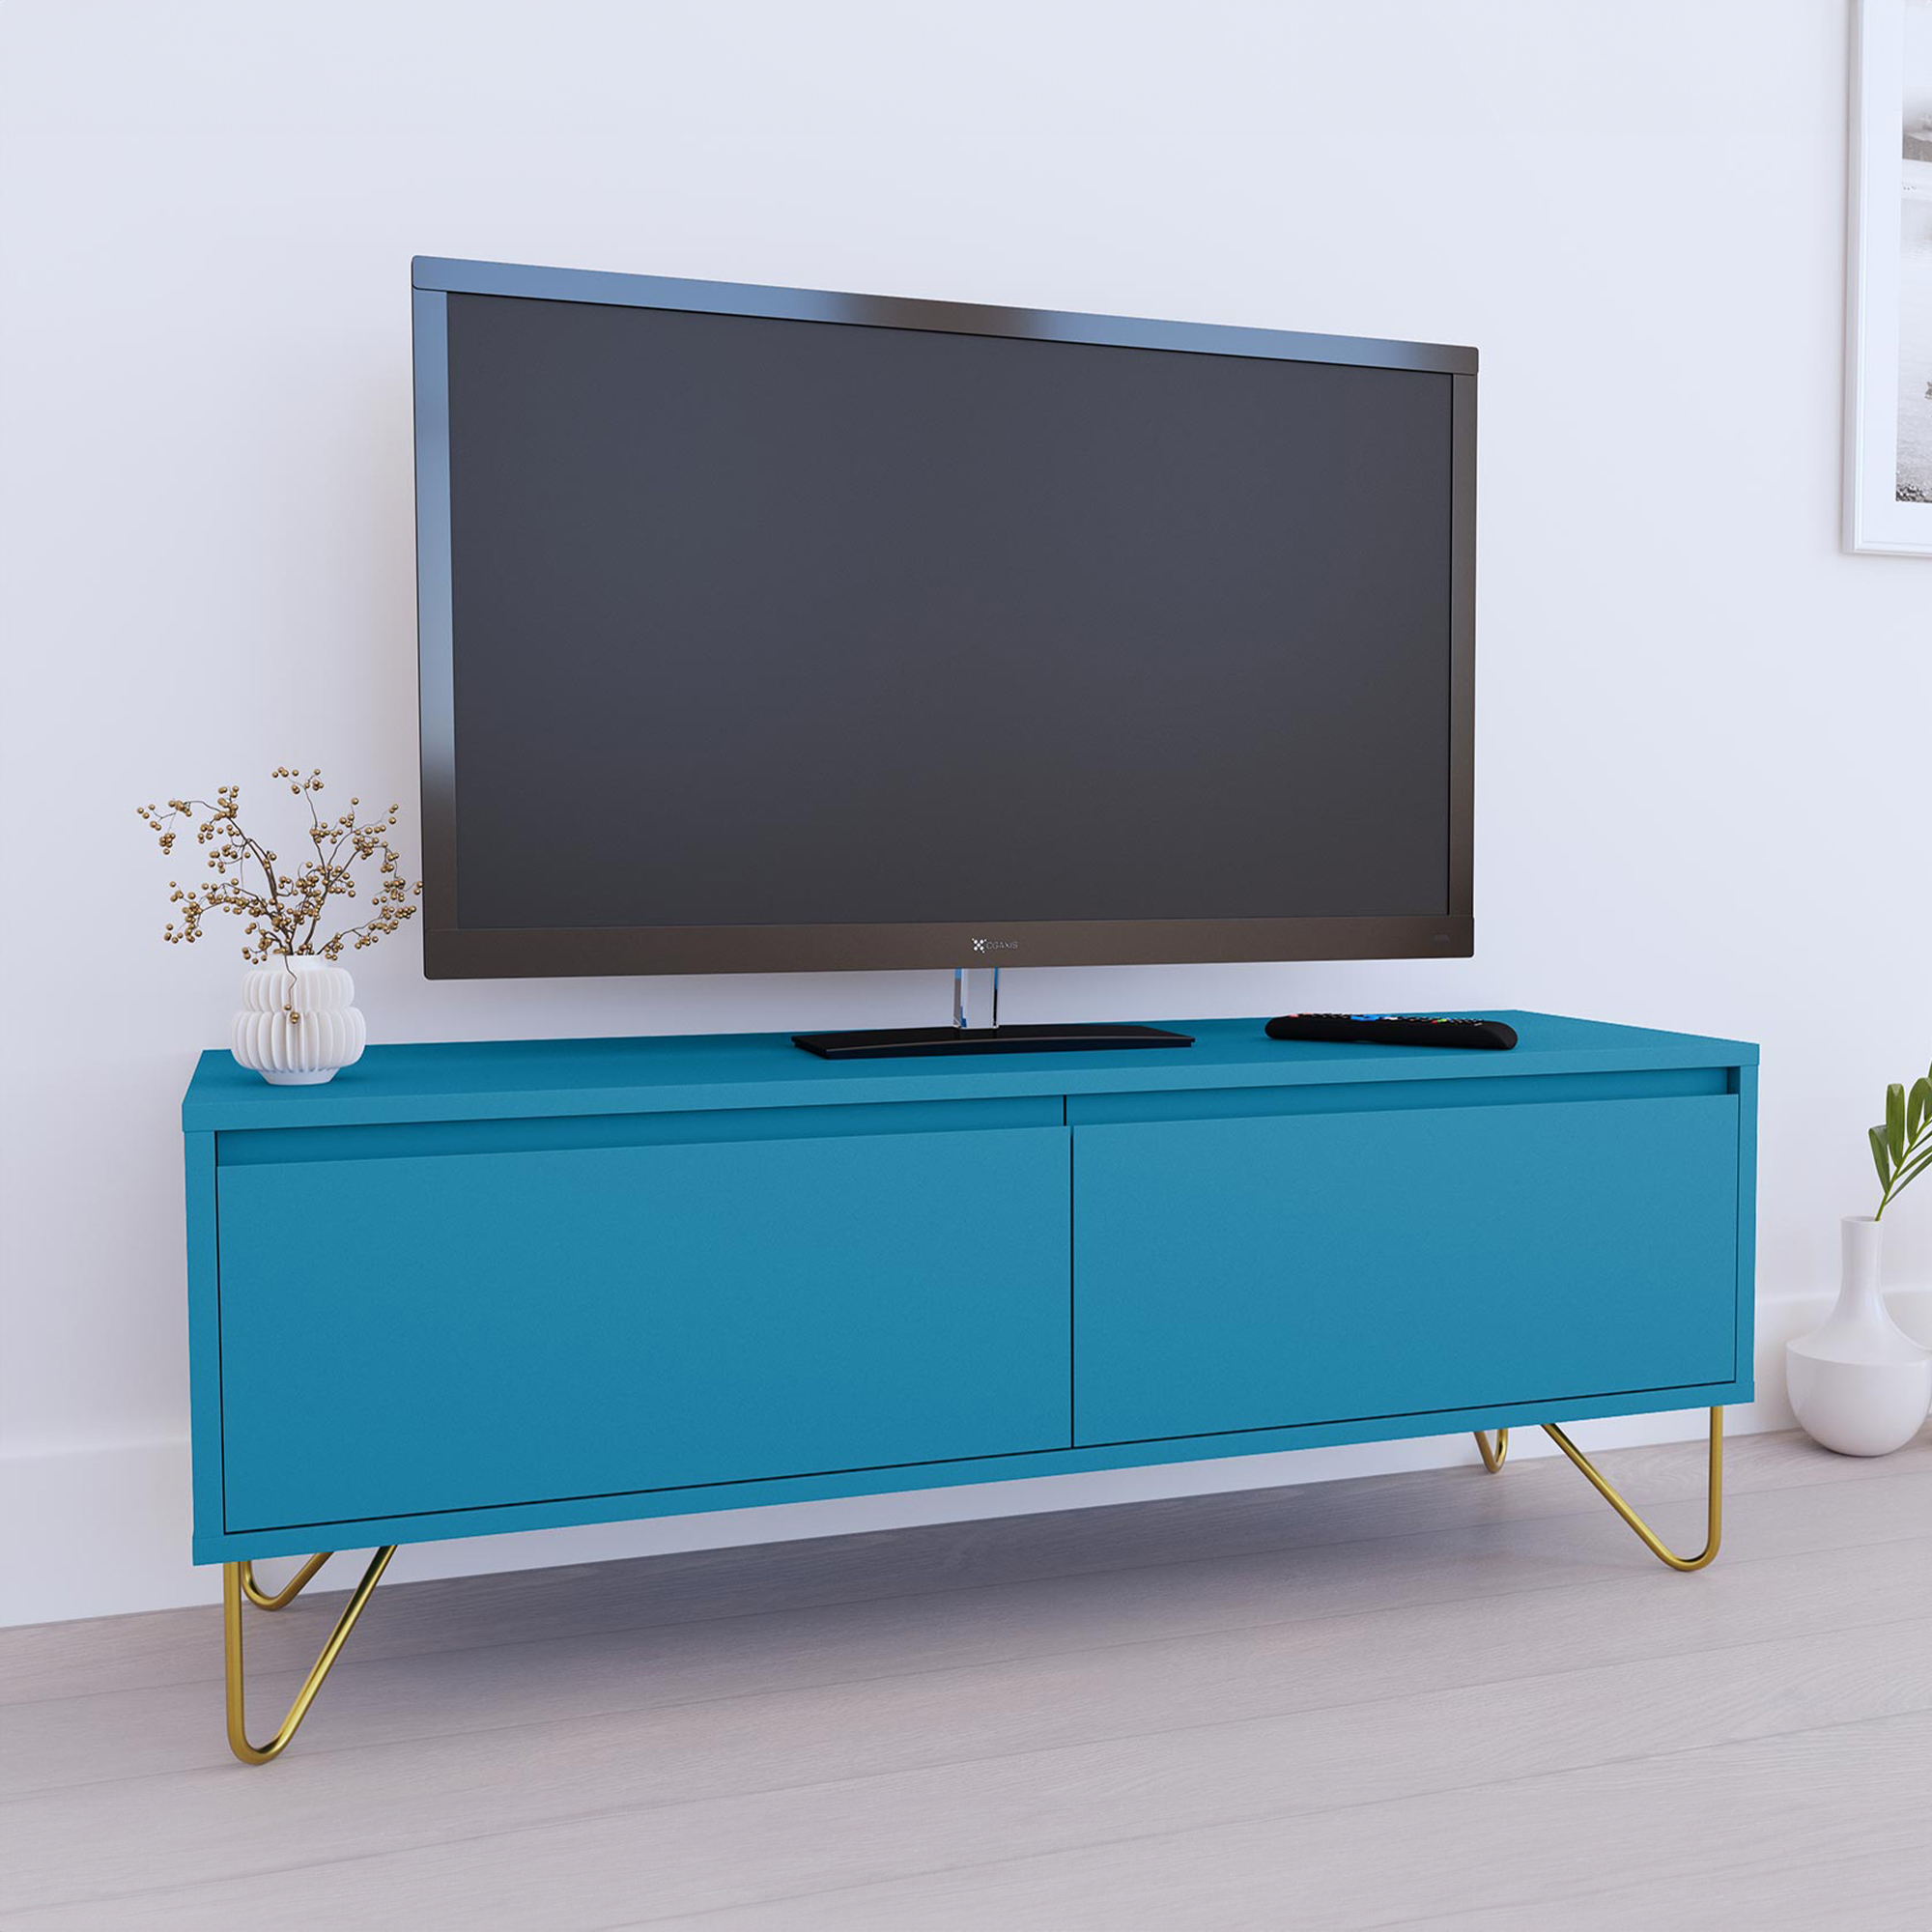 Meuble TV bleu canard composé de 1 tiroir et 1 porte design